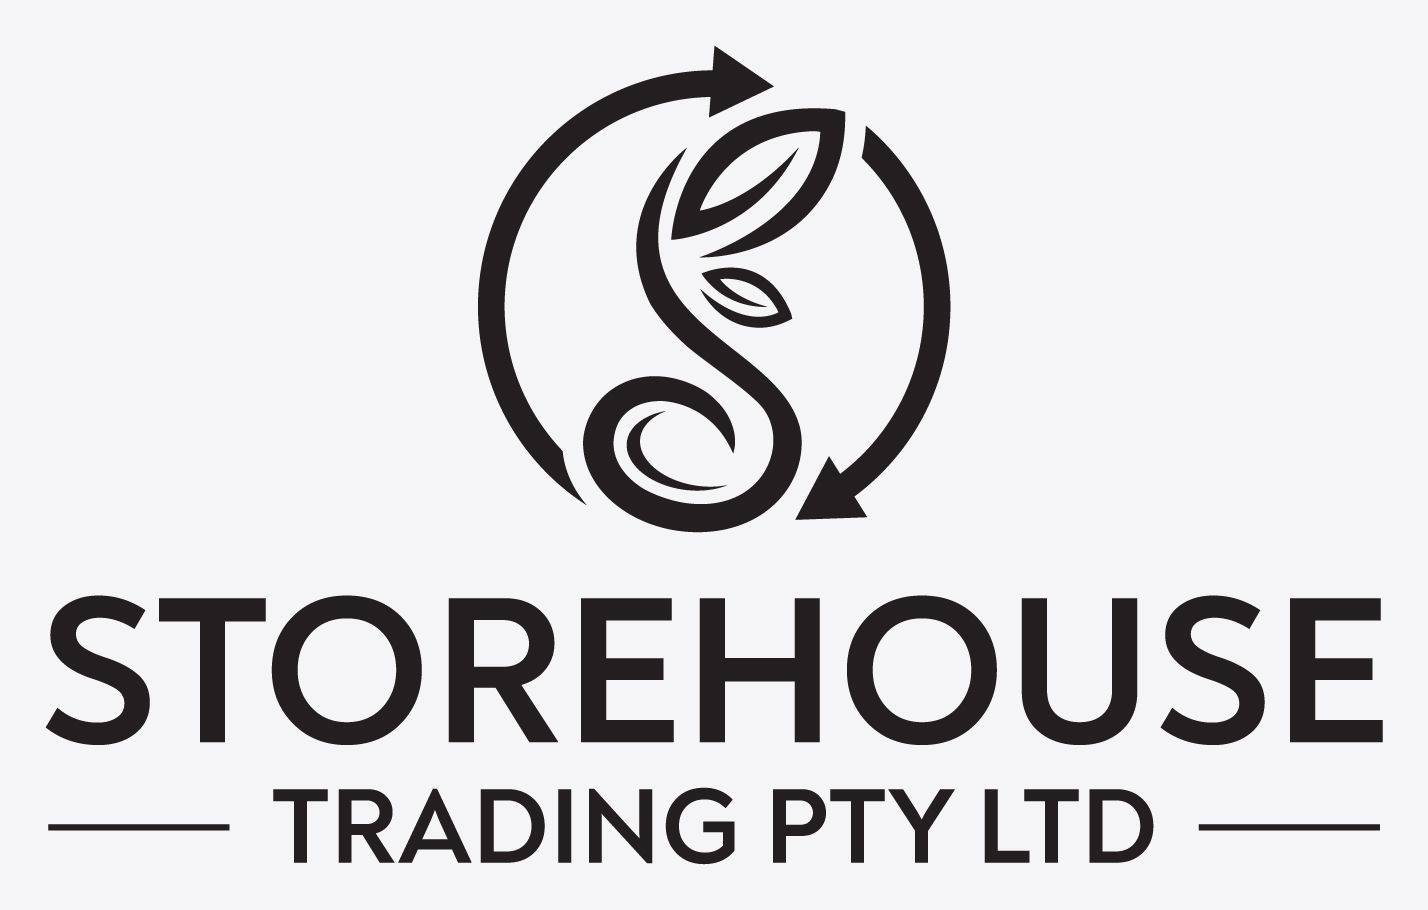 Storehouse Trading Pty Ltd.